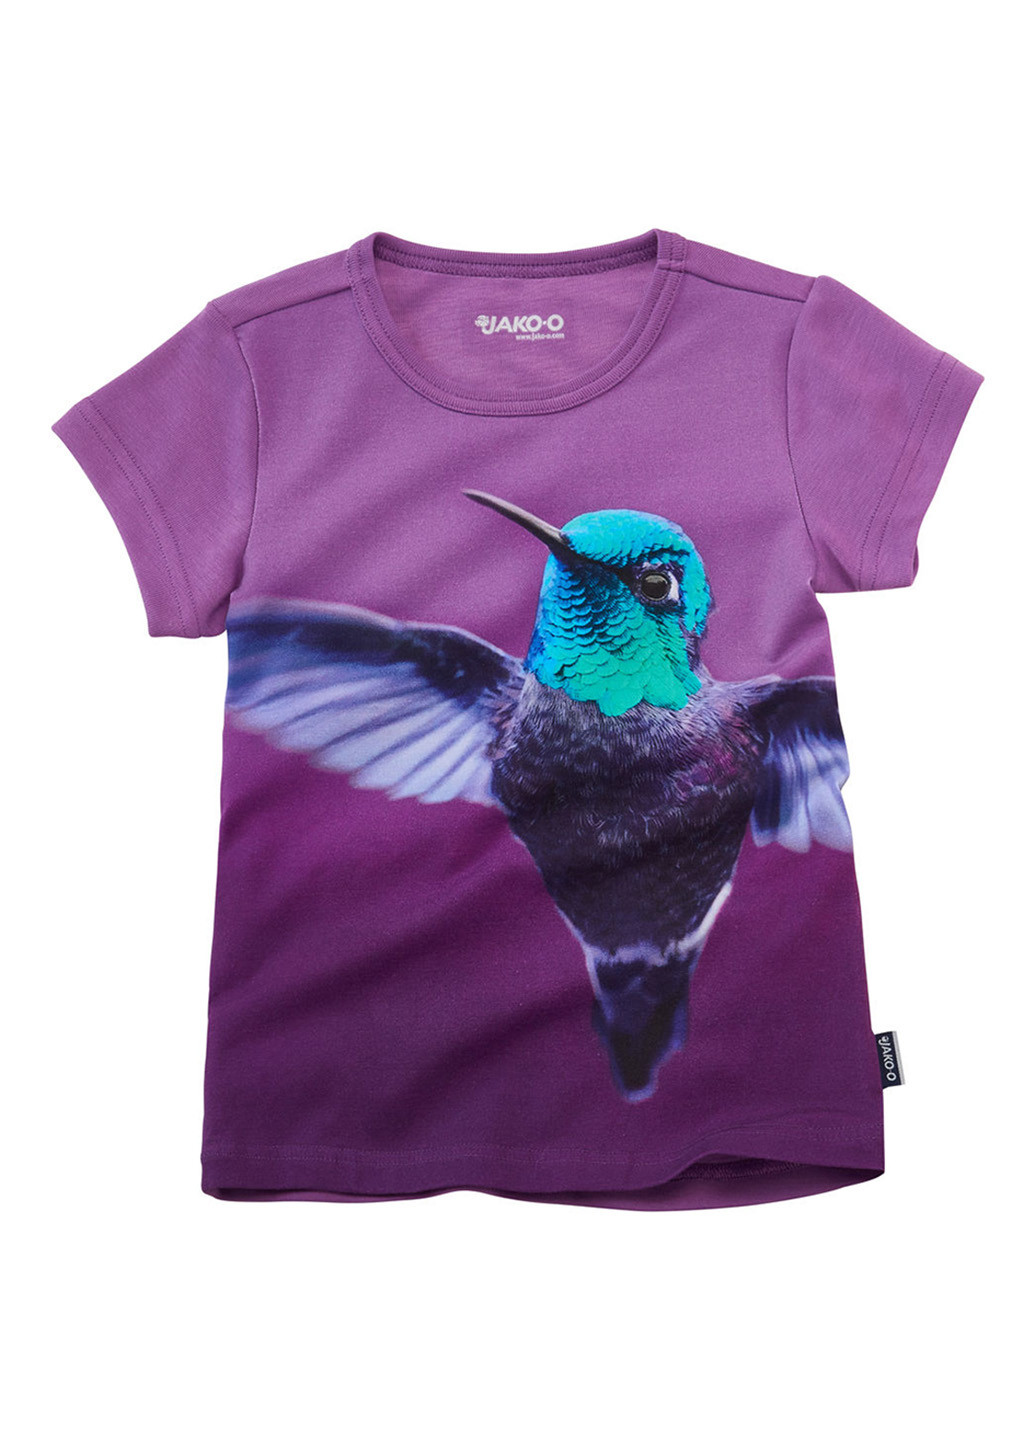 Фіолетова літня футболка Jako-O